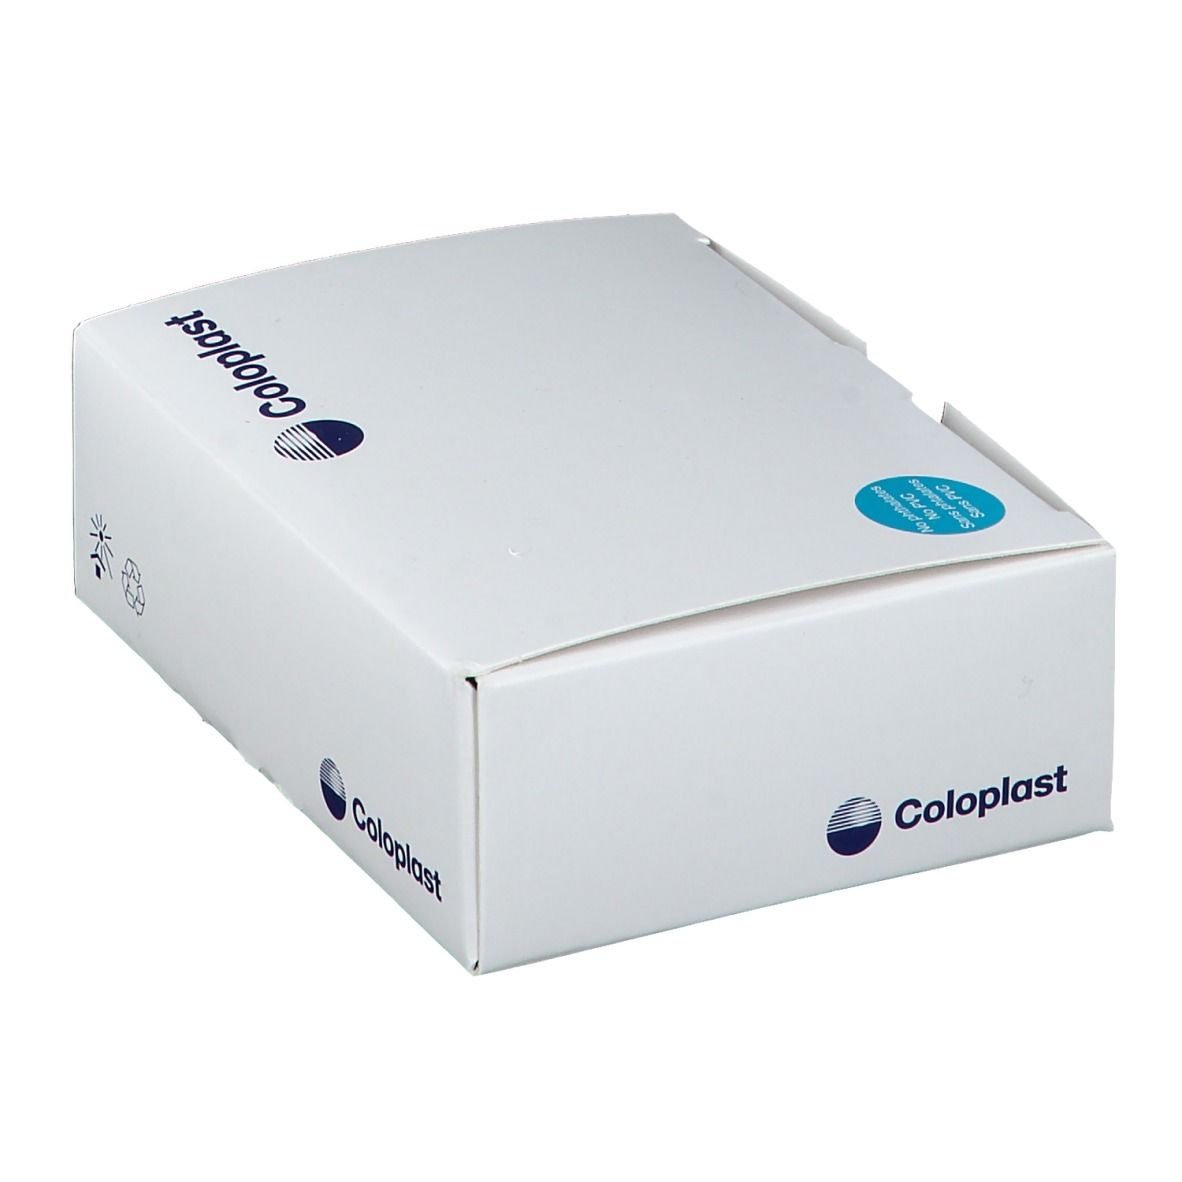 SpeediCath® Compact Katheter CH12, 7cm, Nelaton, Frauen